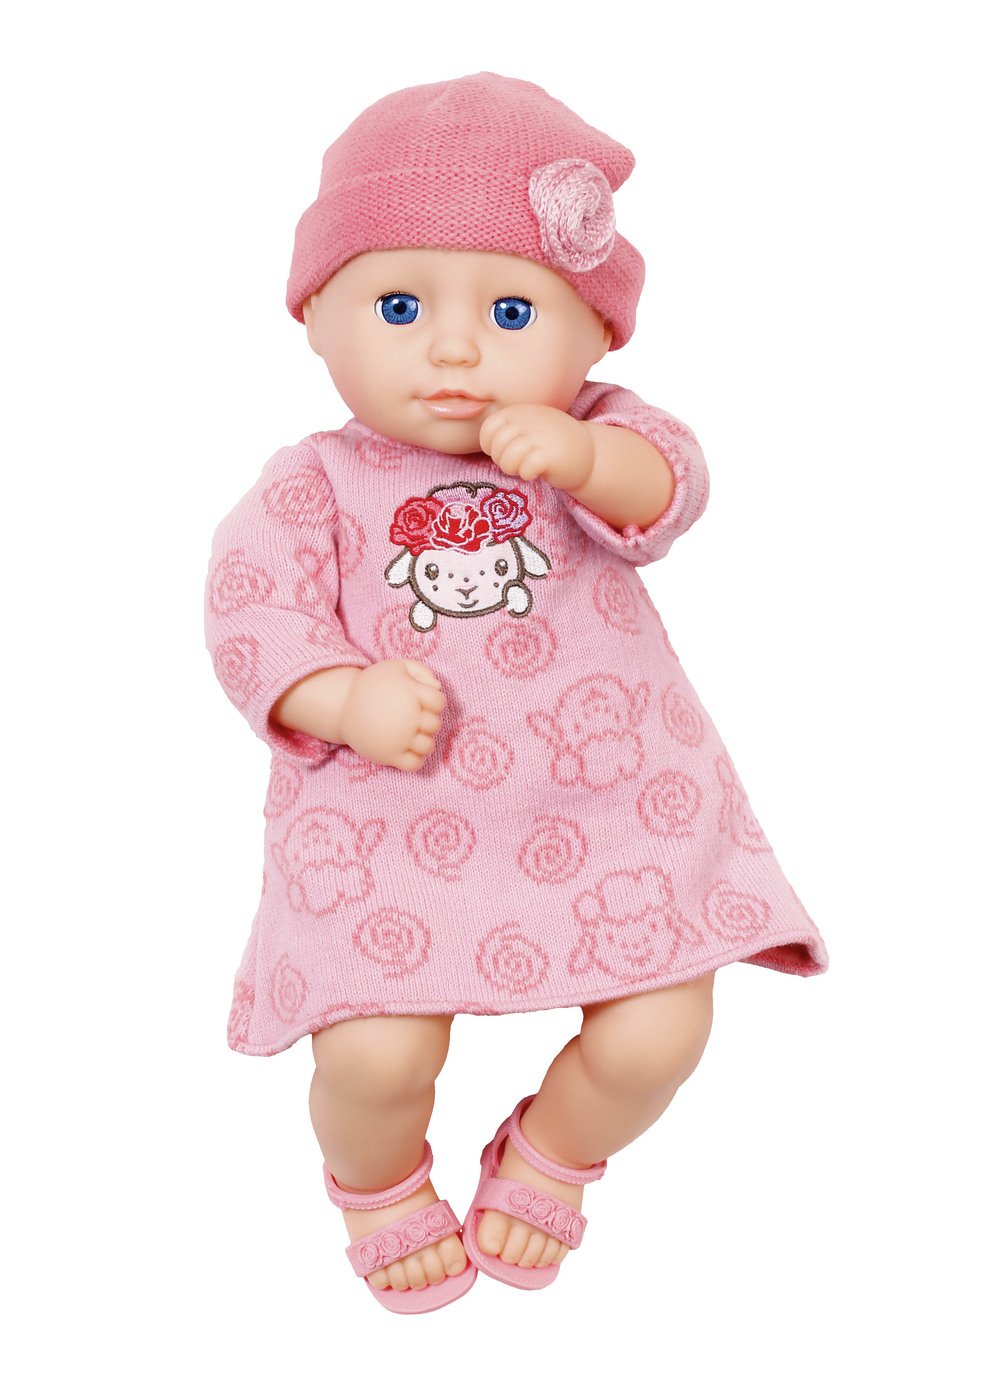 Baby Annabell Little Annabell Knit Dress Set Review